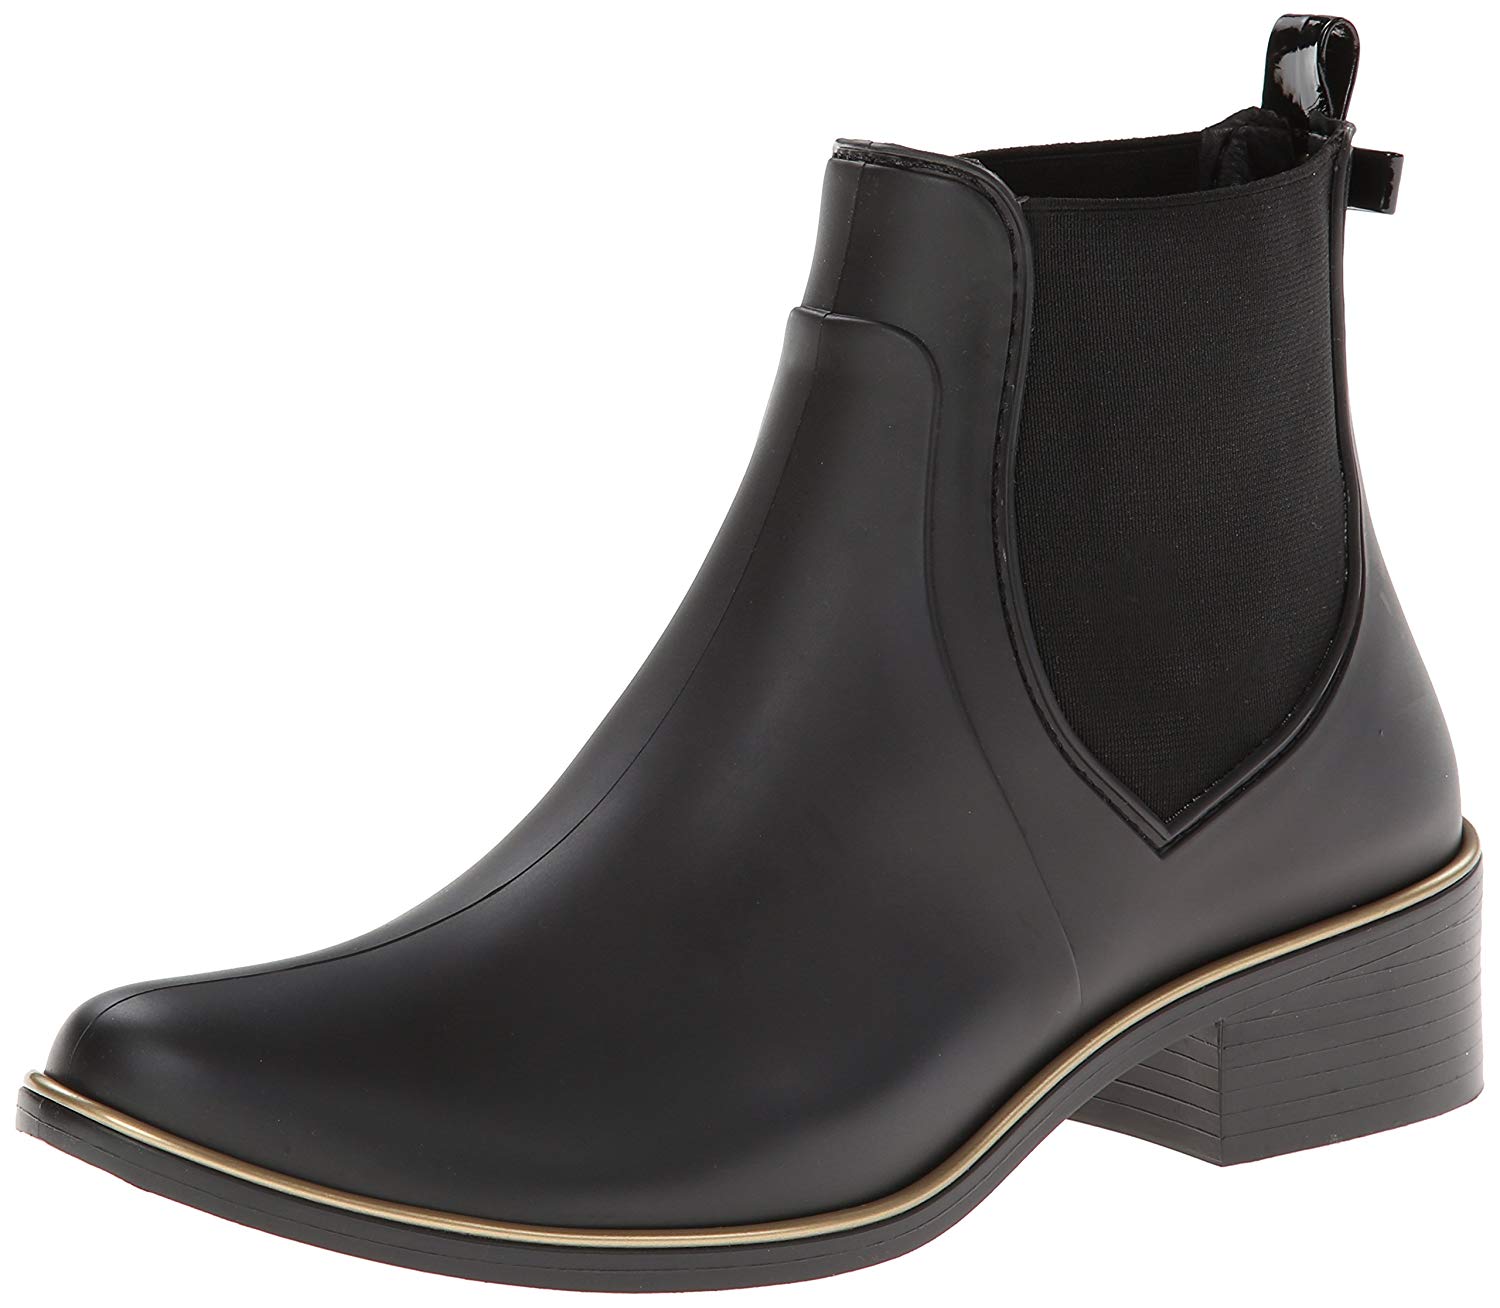 kate spade new york Women's Sedgewick Rain Boot, Black, Size 9.0 cbsm ...